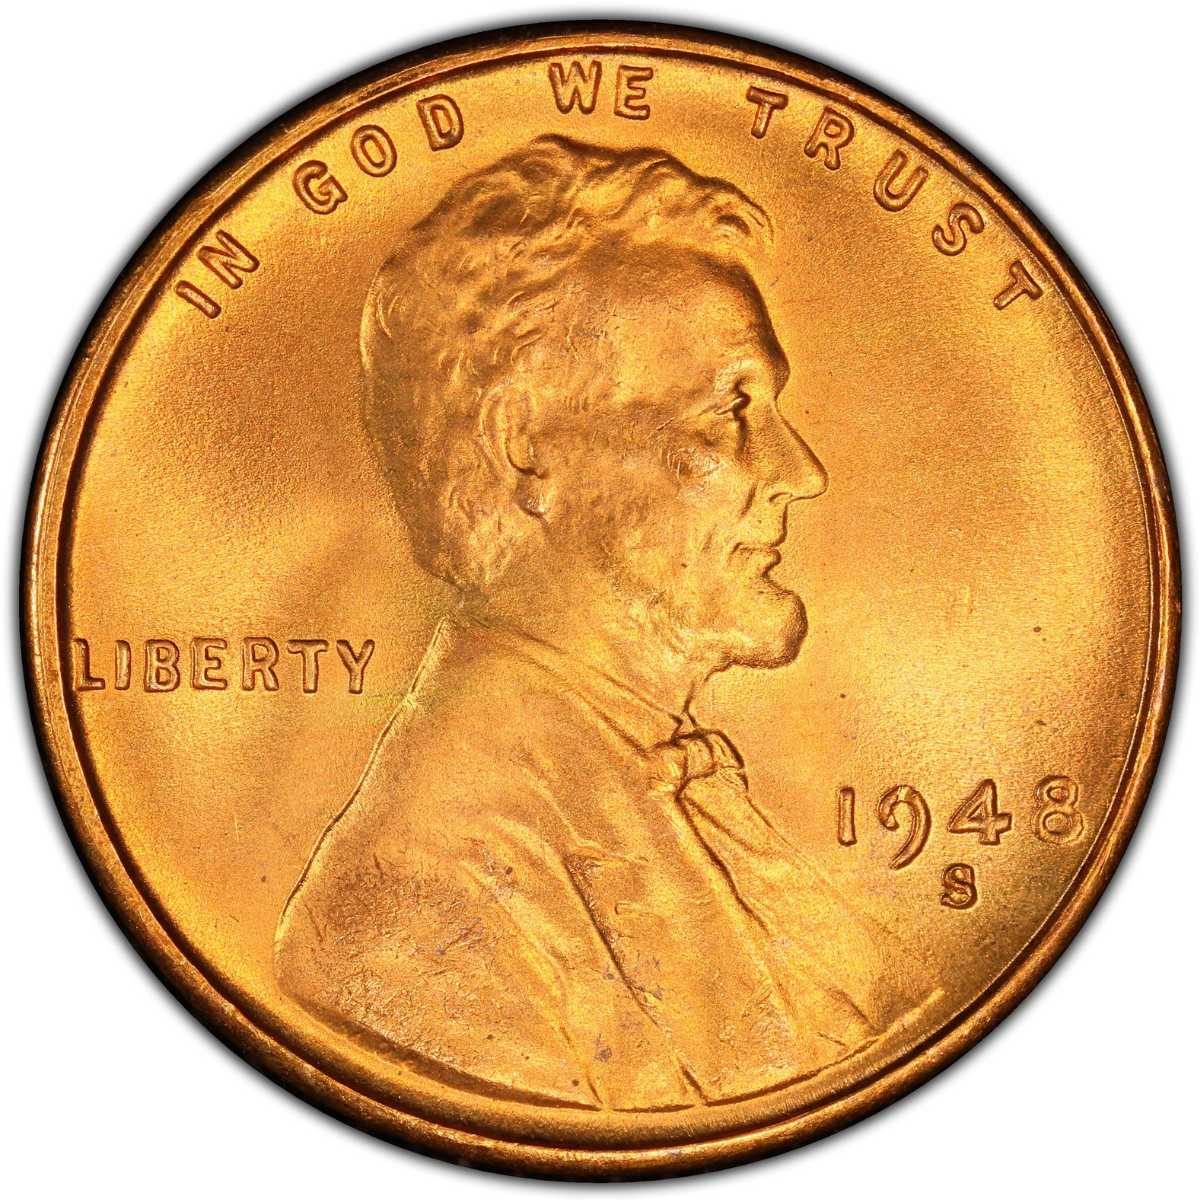 1948 Wheat Penny